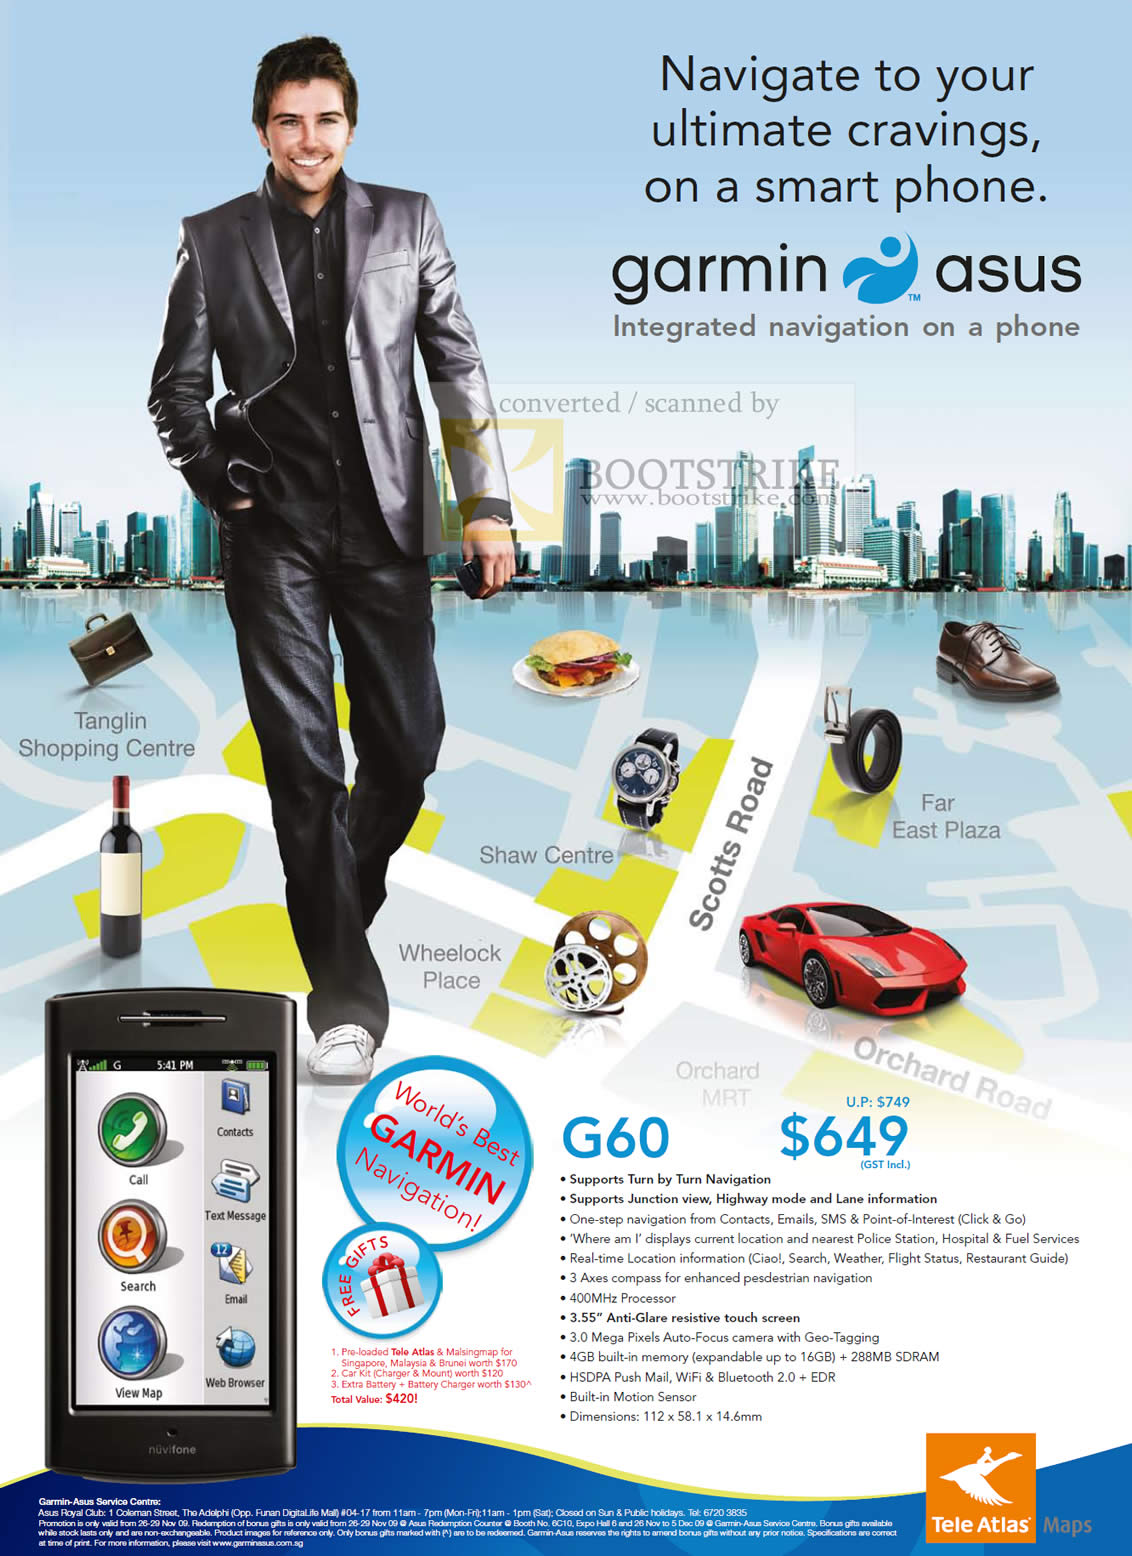 Sitex 2009 price list image brochure of ASUS Garmin G60 Navigation Phone TeleAtlas